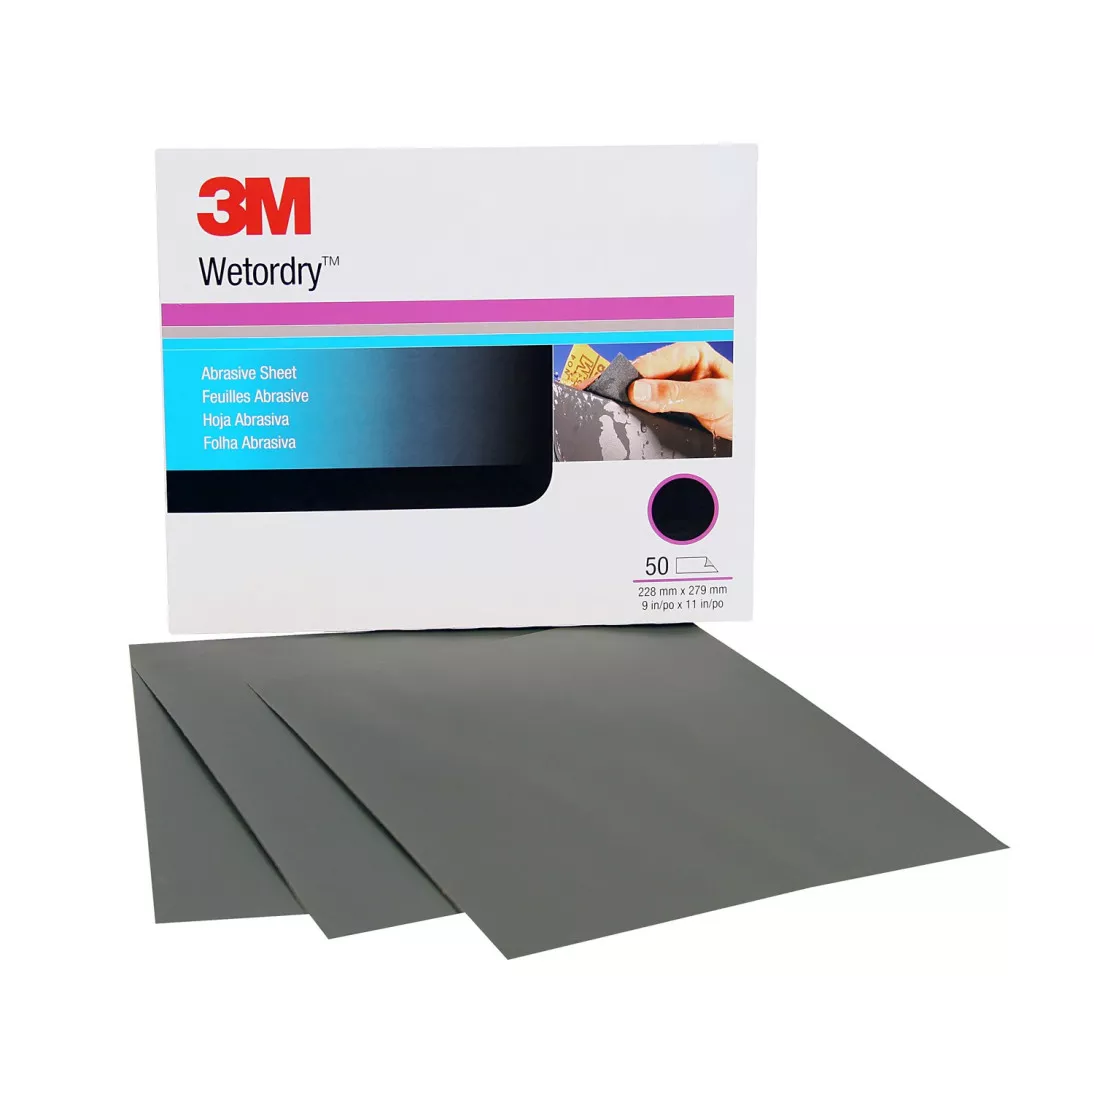 3M™ Wetordry™ Abrasive Sheet, 02042, P240, 9 in x 11 in, 50 sheets per
carton, 5 cartons per case